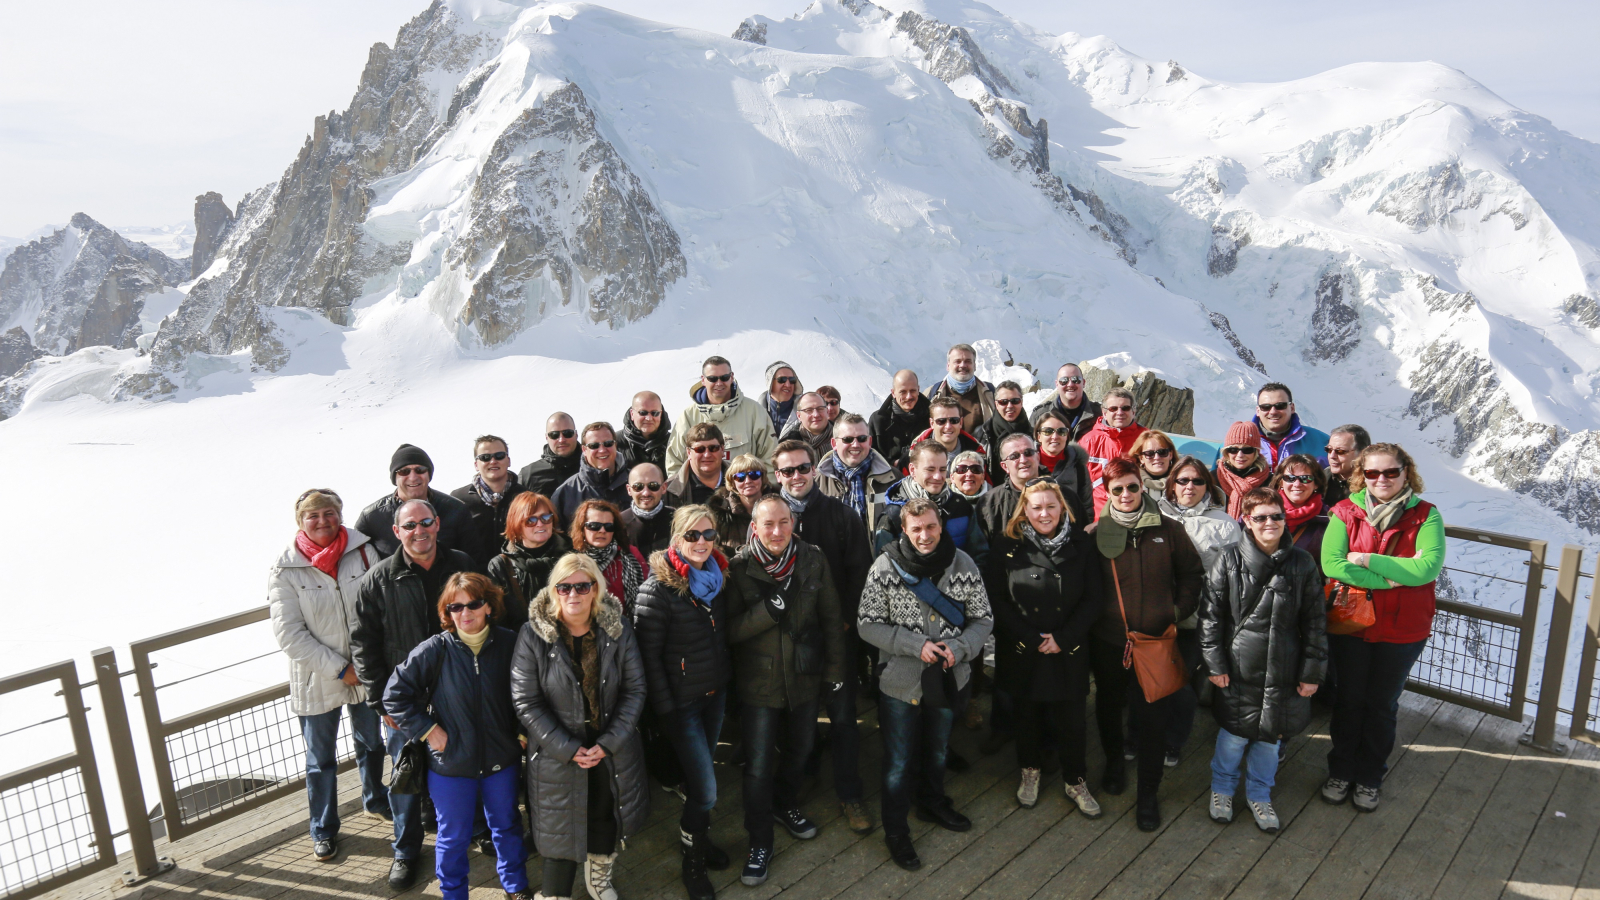 Sommet Aiguille du Midi - Chamonix Seminaires